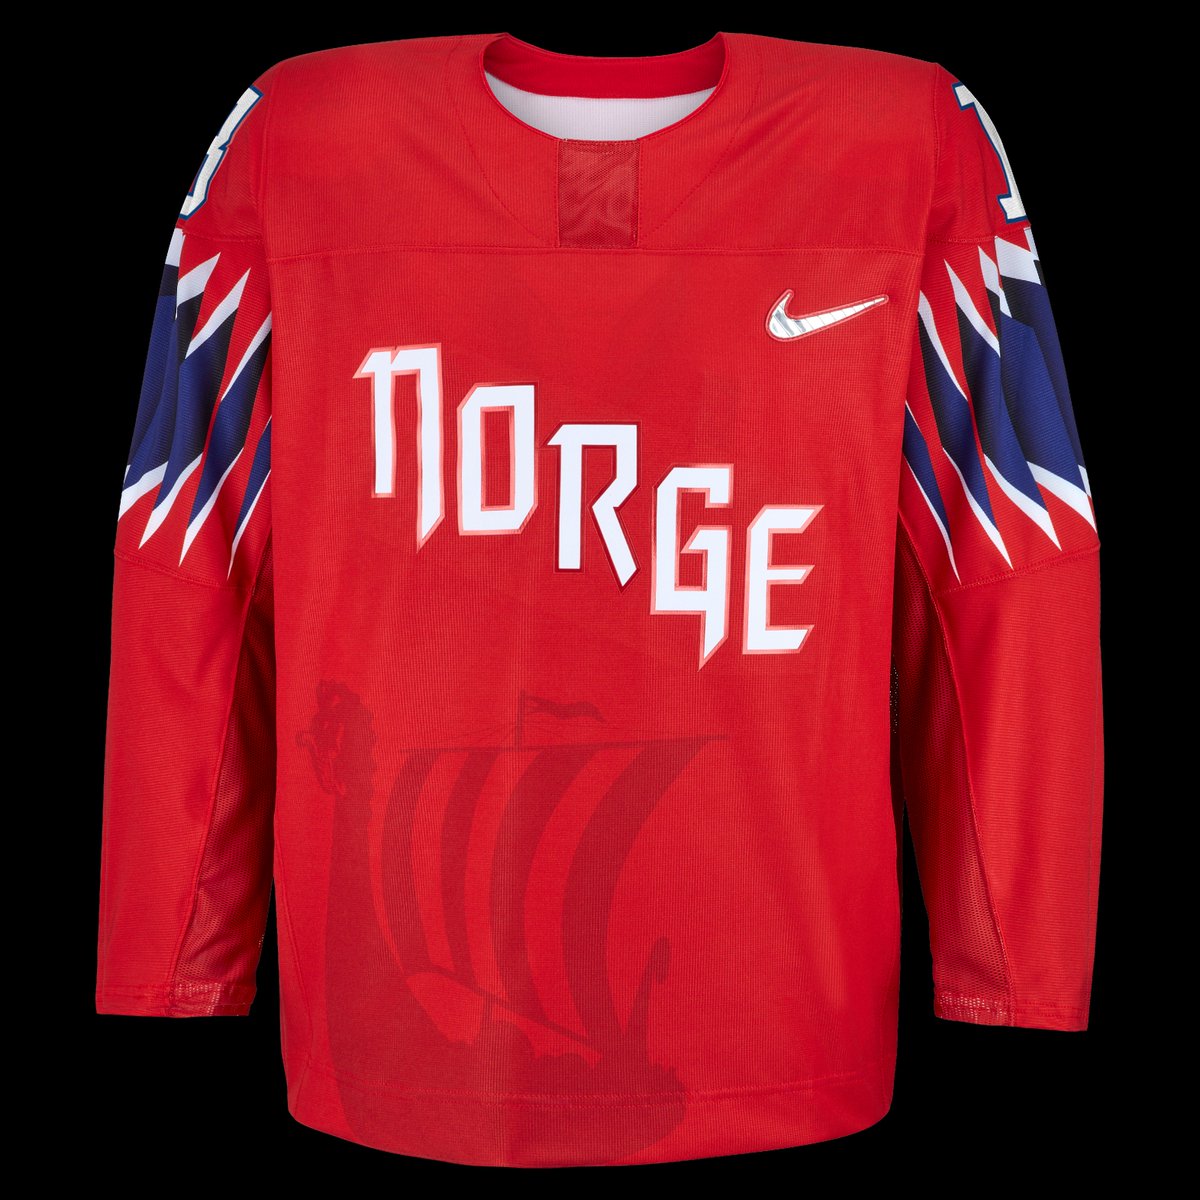 norge hockey jersey